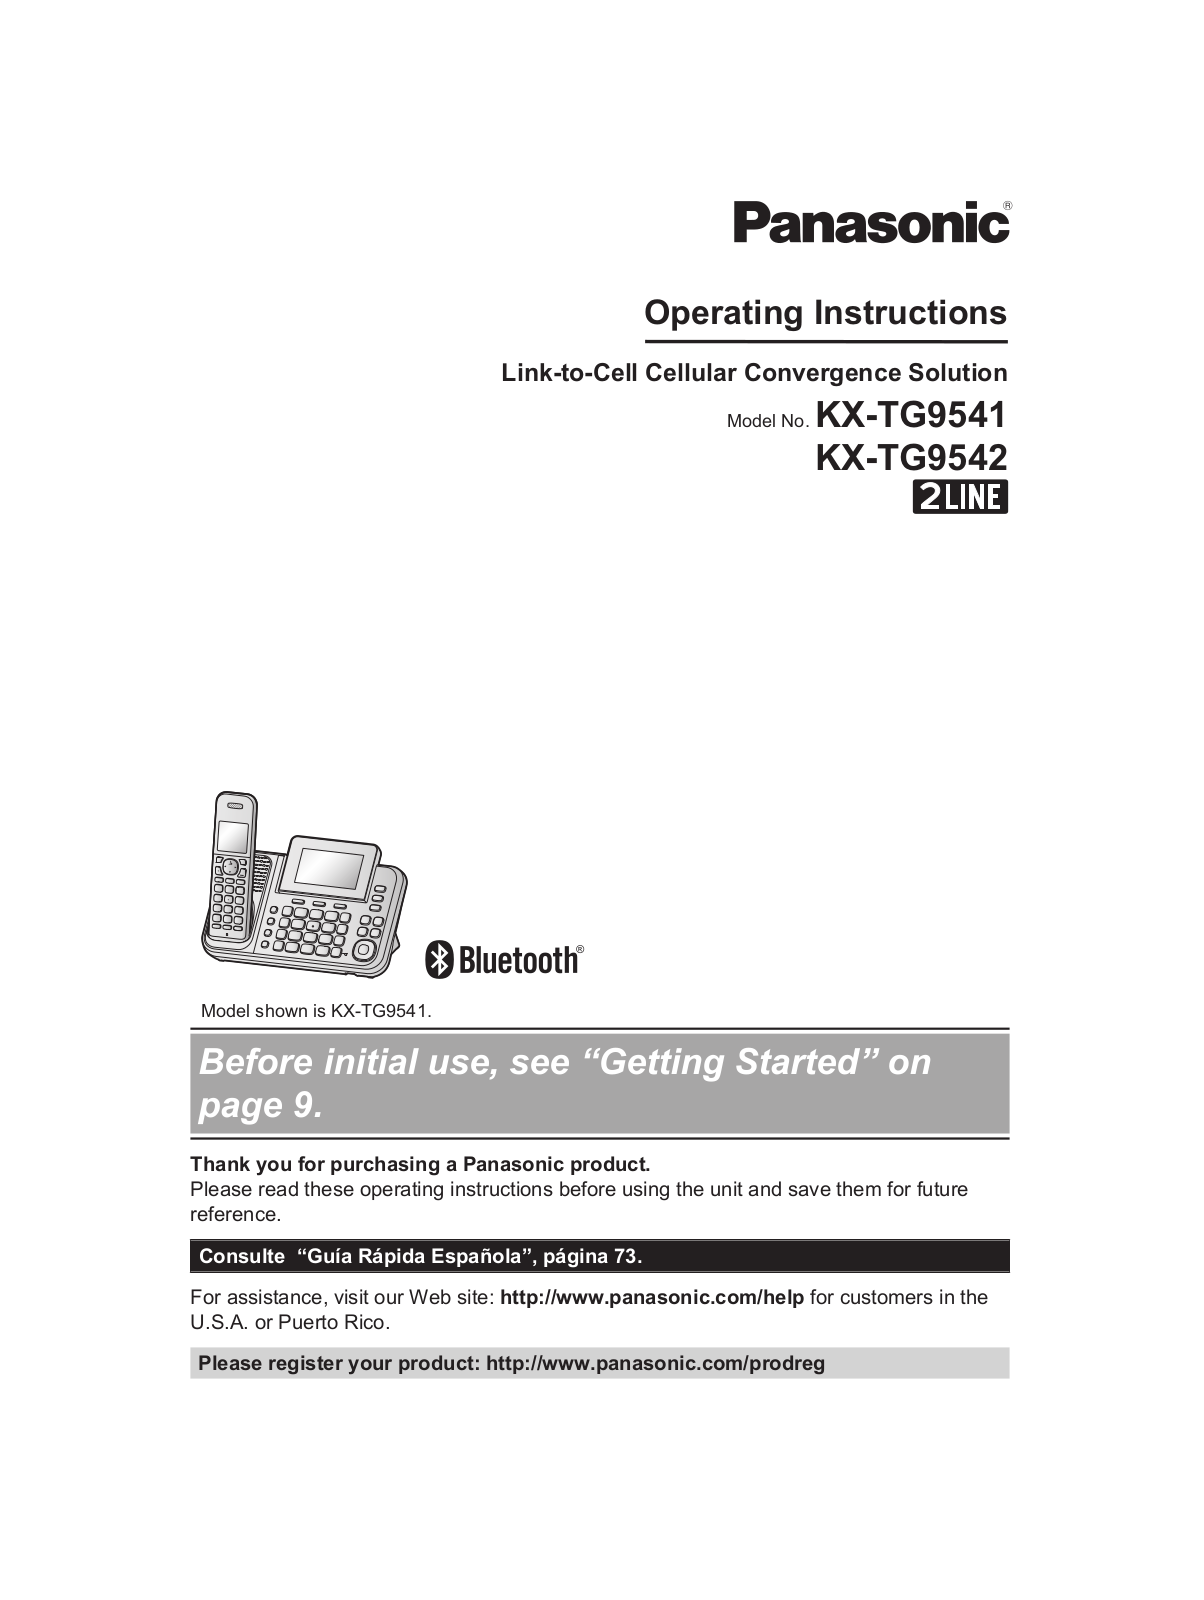 Panasonic KX-TG9541, KX-TG9542 Operating Instruction